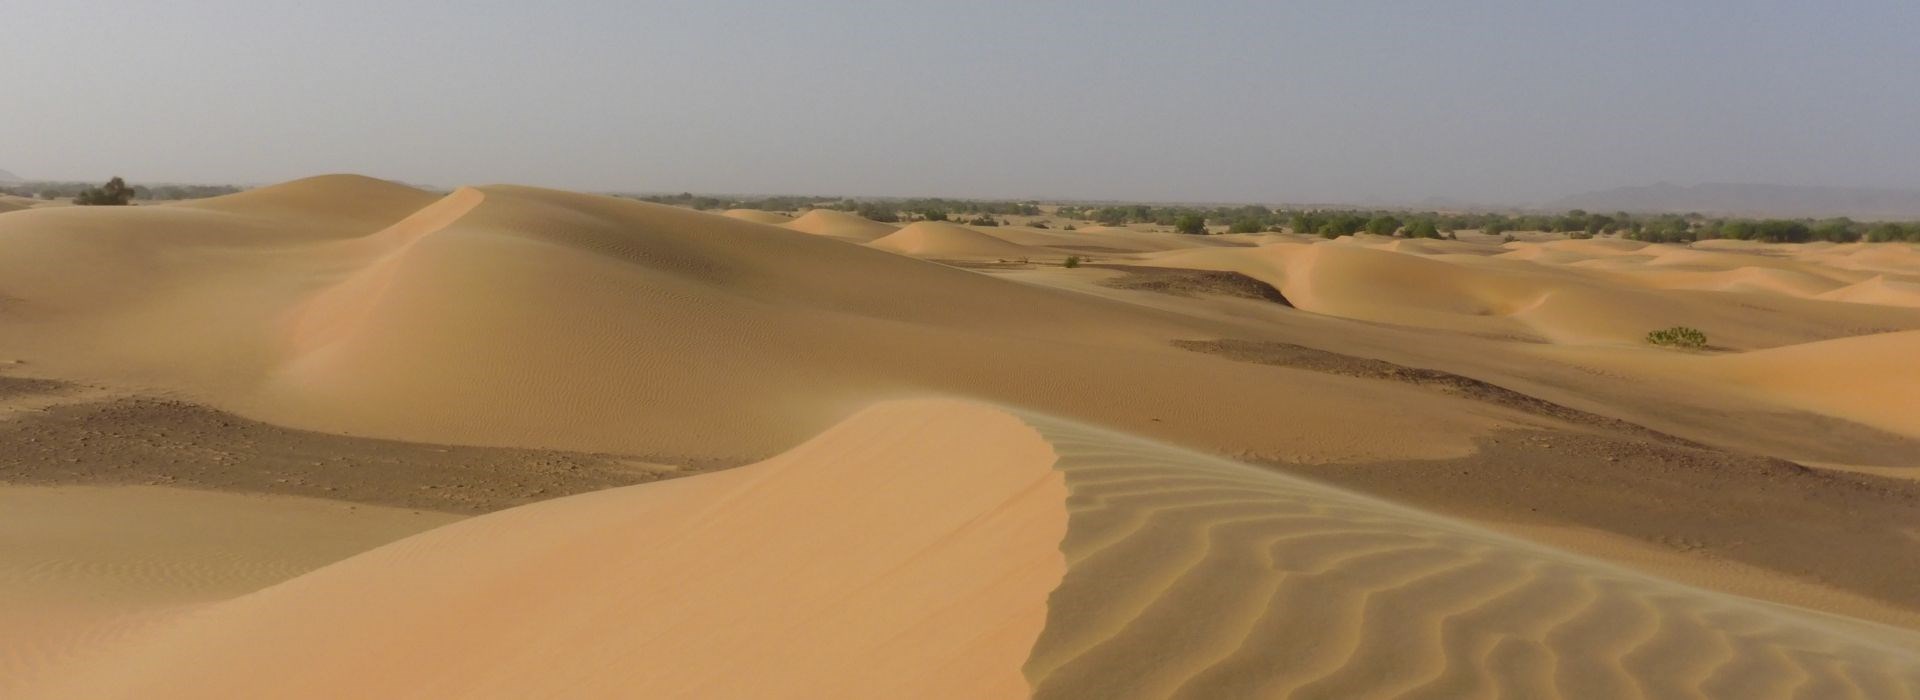 Visiter L'Erg Le Meileh - Mauritanie